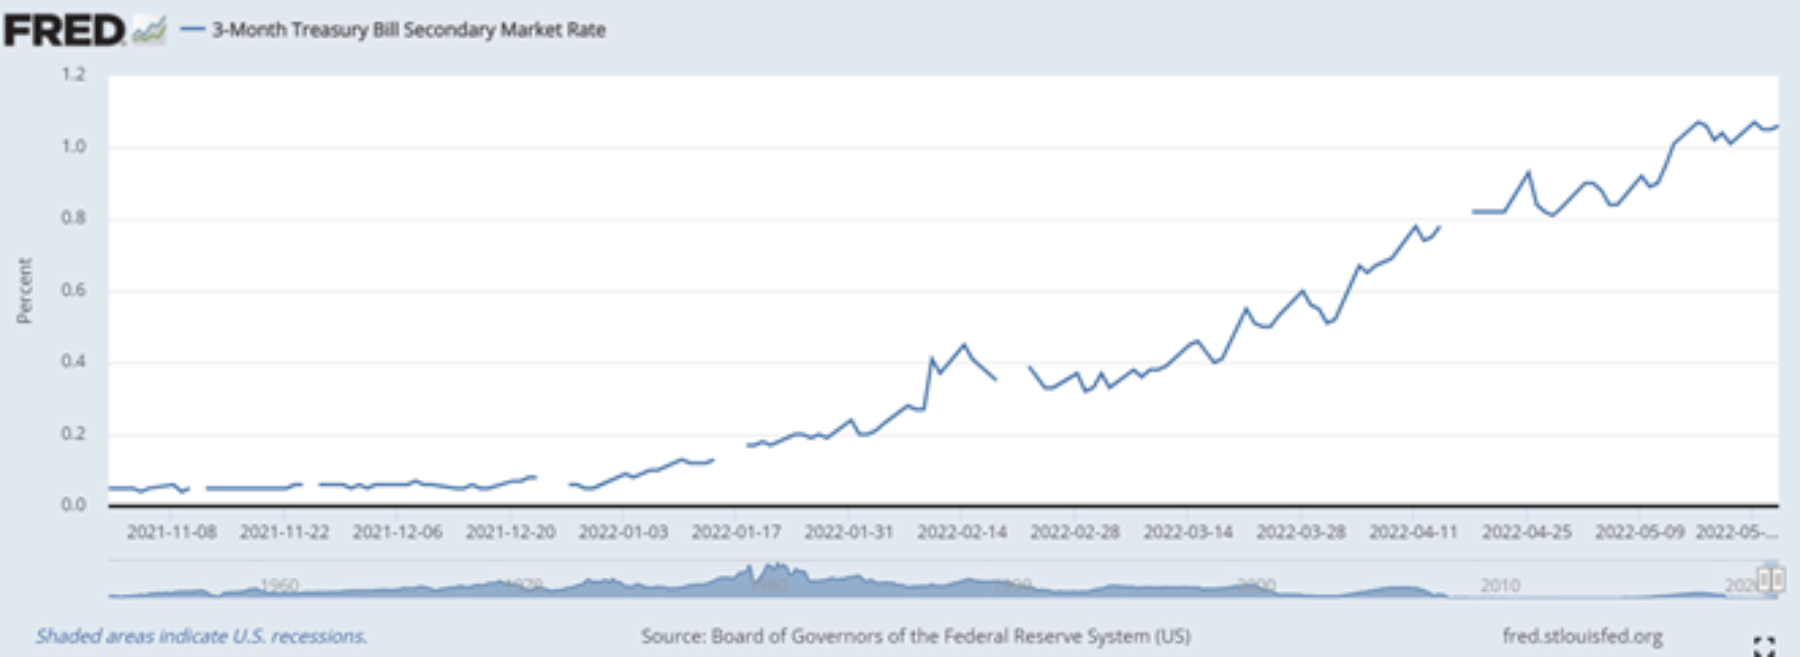 3 Month Treasury Bill Secondary Market Rate